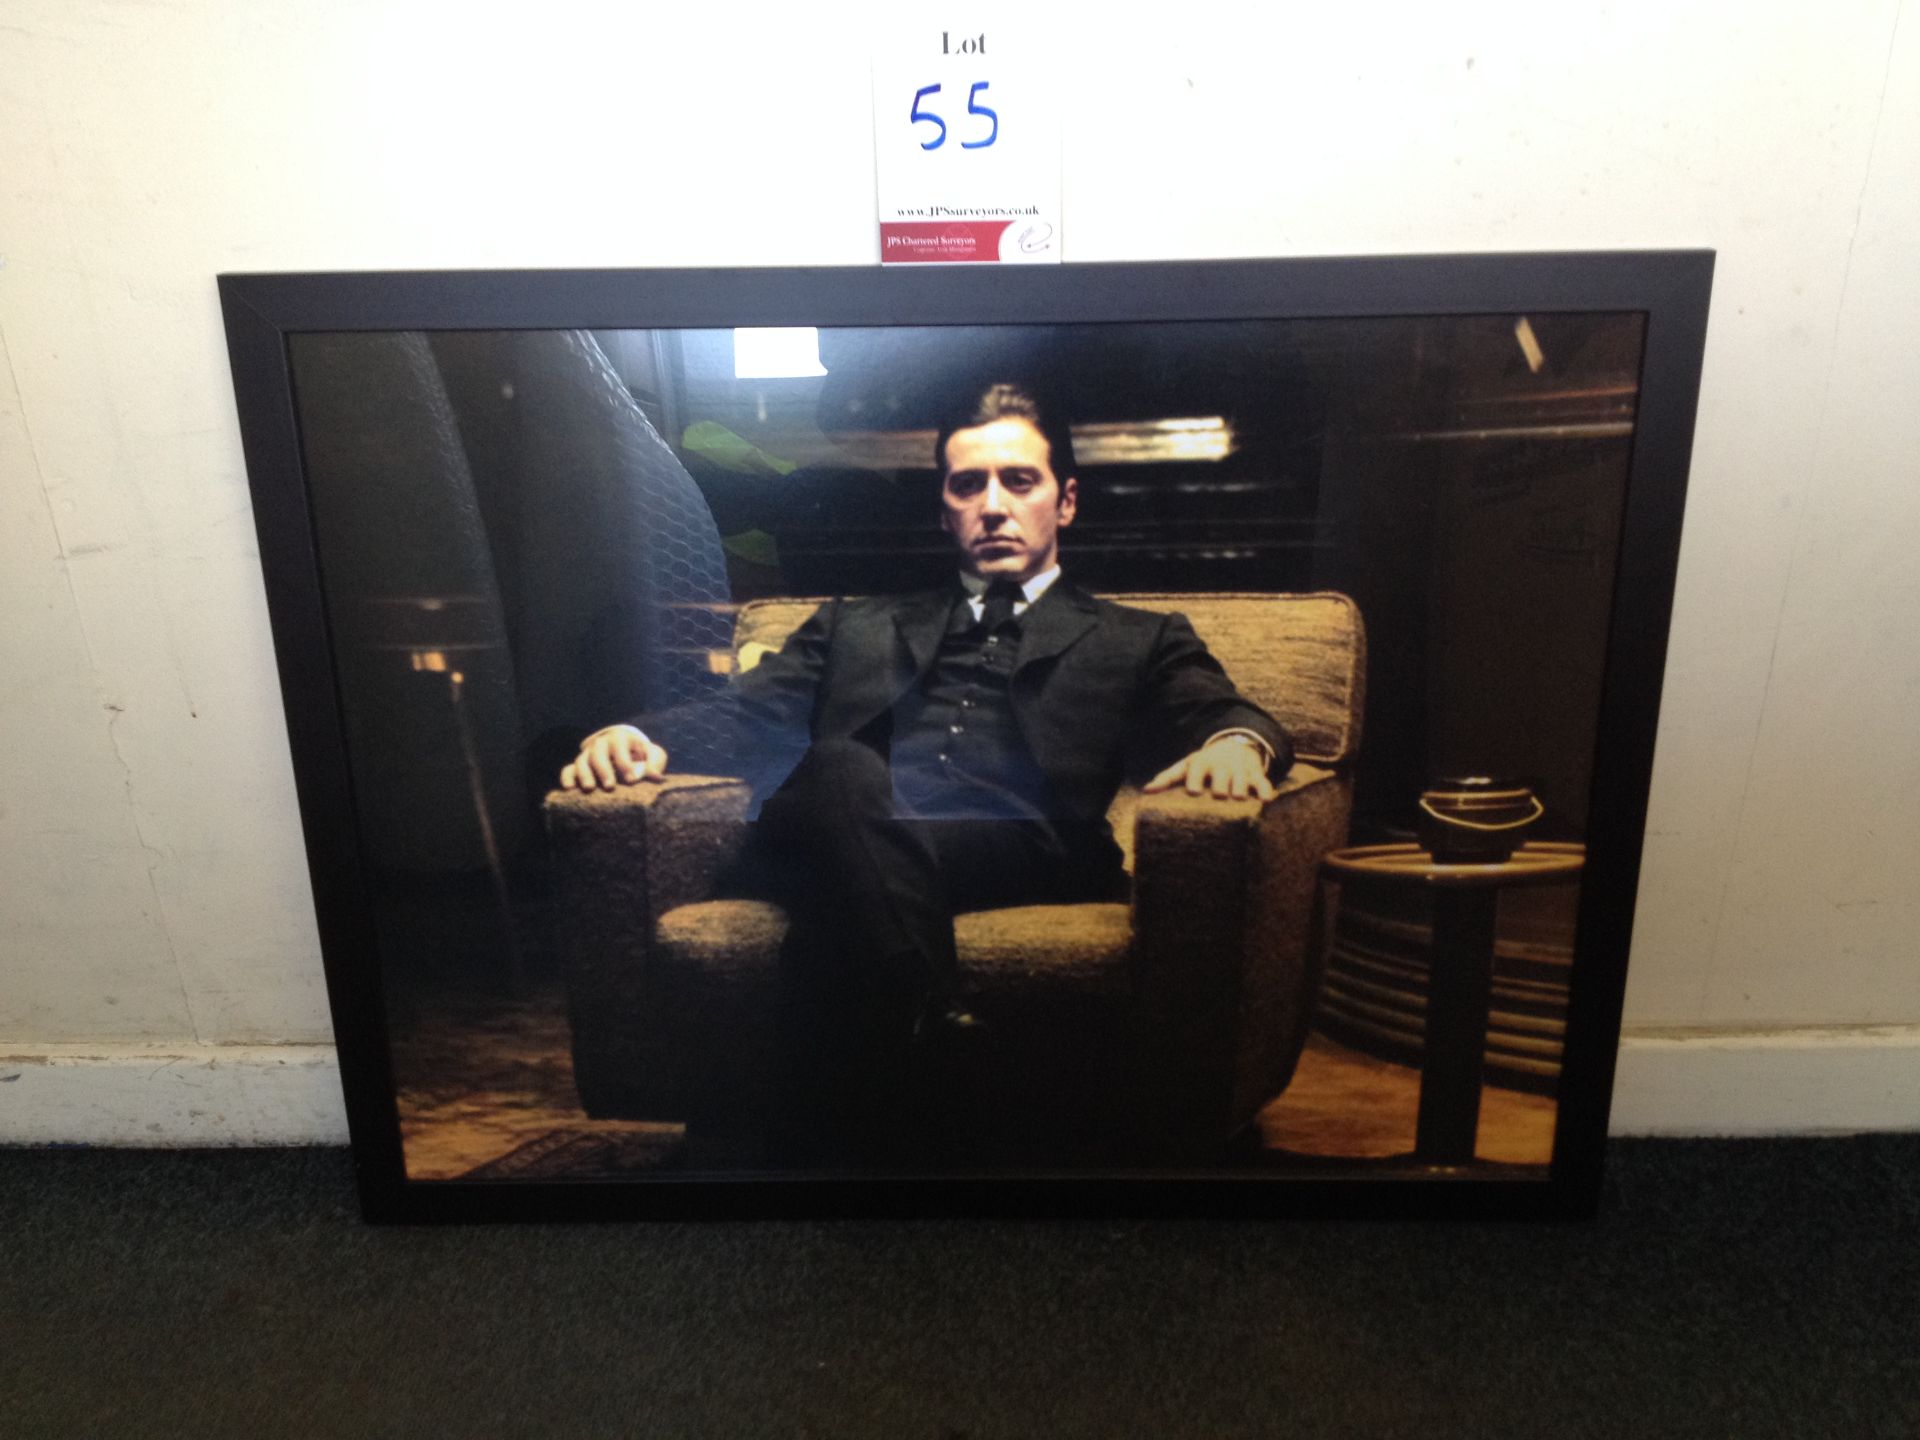 Al Pacino - The Godfather Framed Print Size: 87 x 66cm